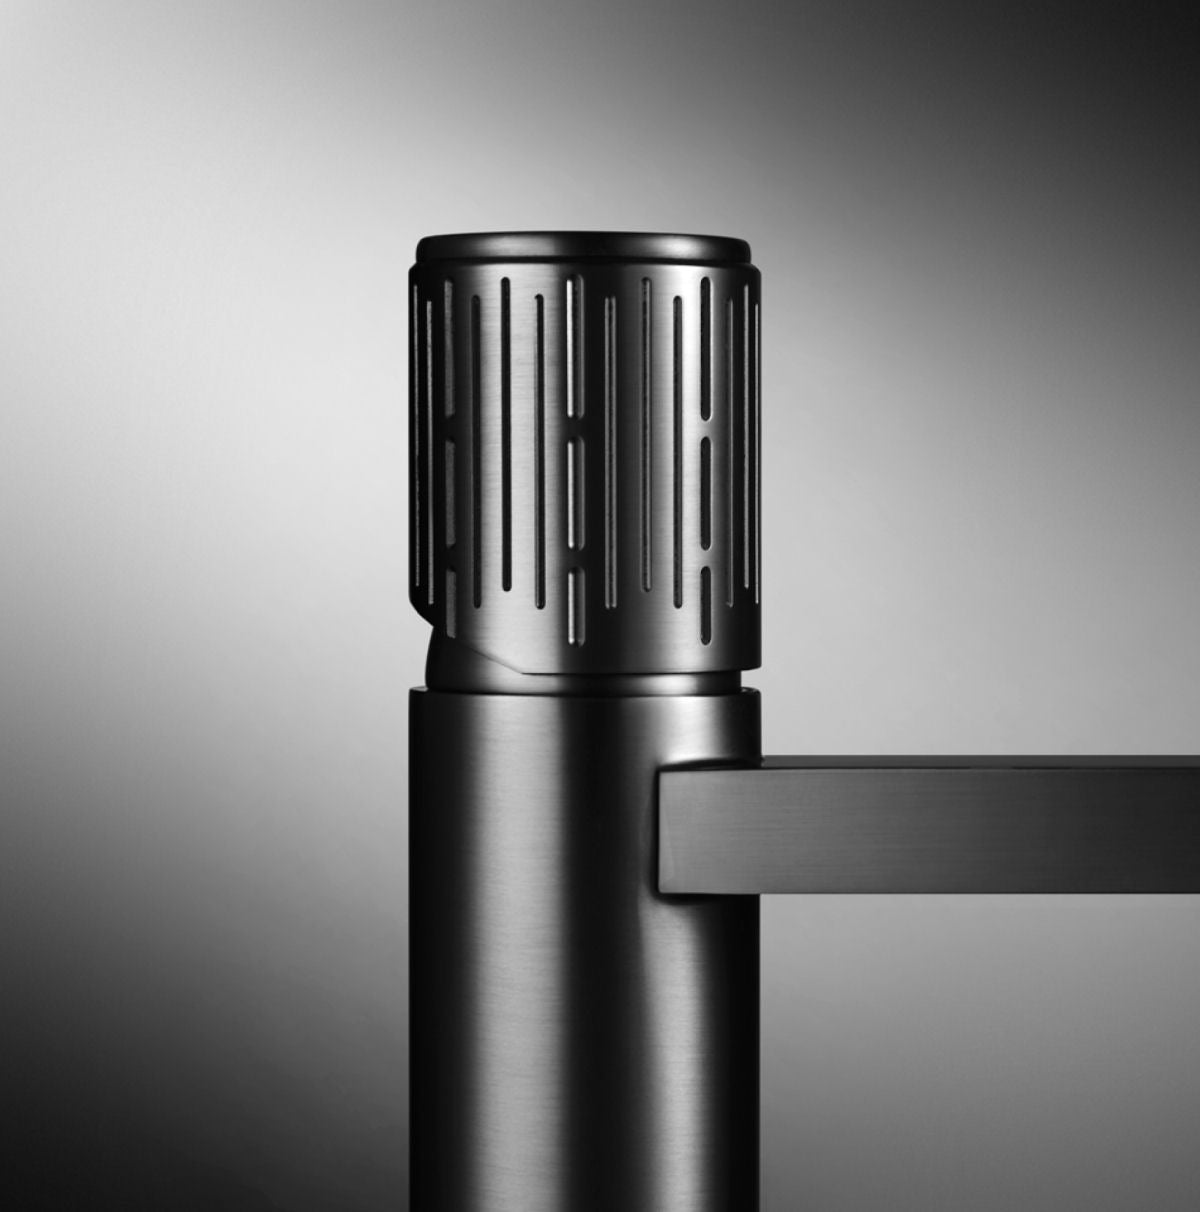 Glass Design Luxury Bathroom Black Crystal Sink Combo with Gun Metal Faucet - |VESIMI Design| Luxury and Rustic bathrooms online